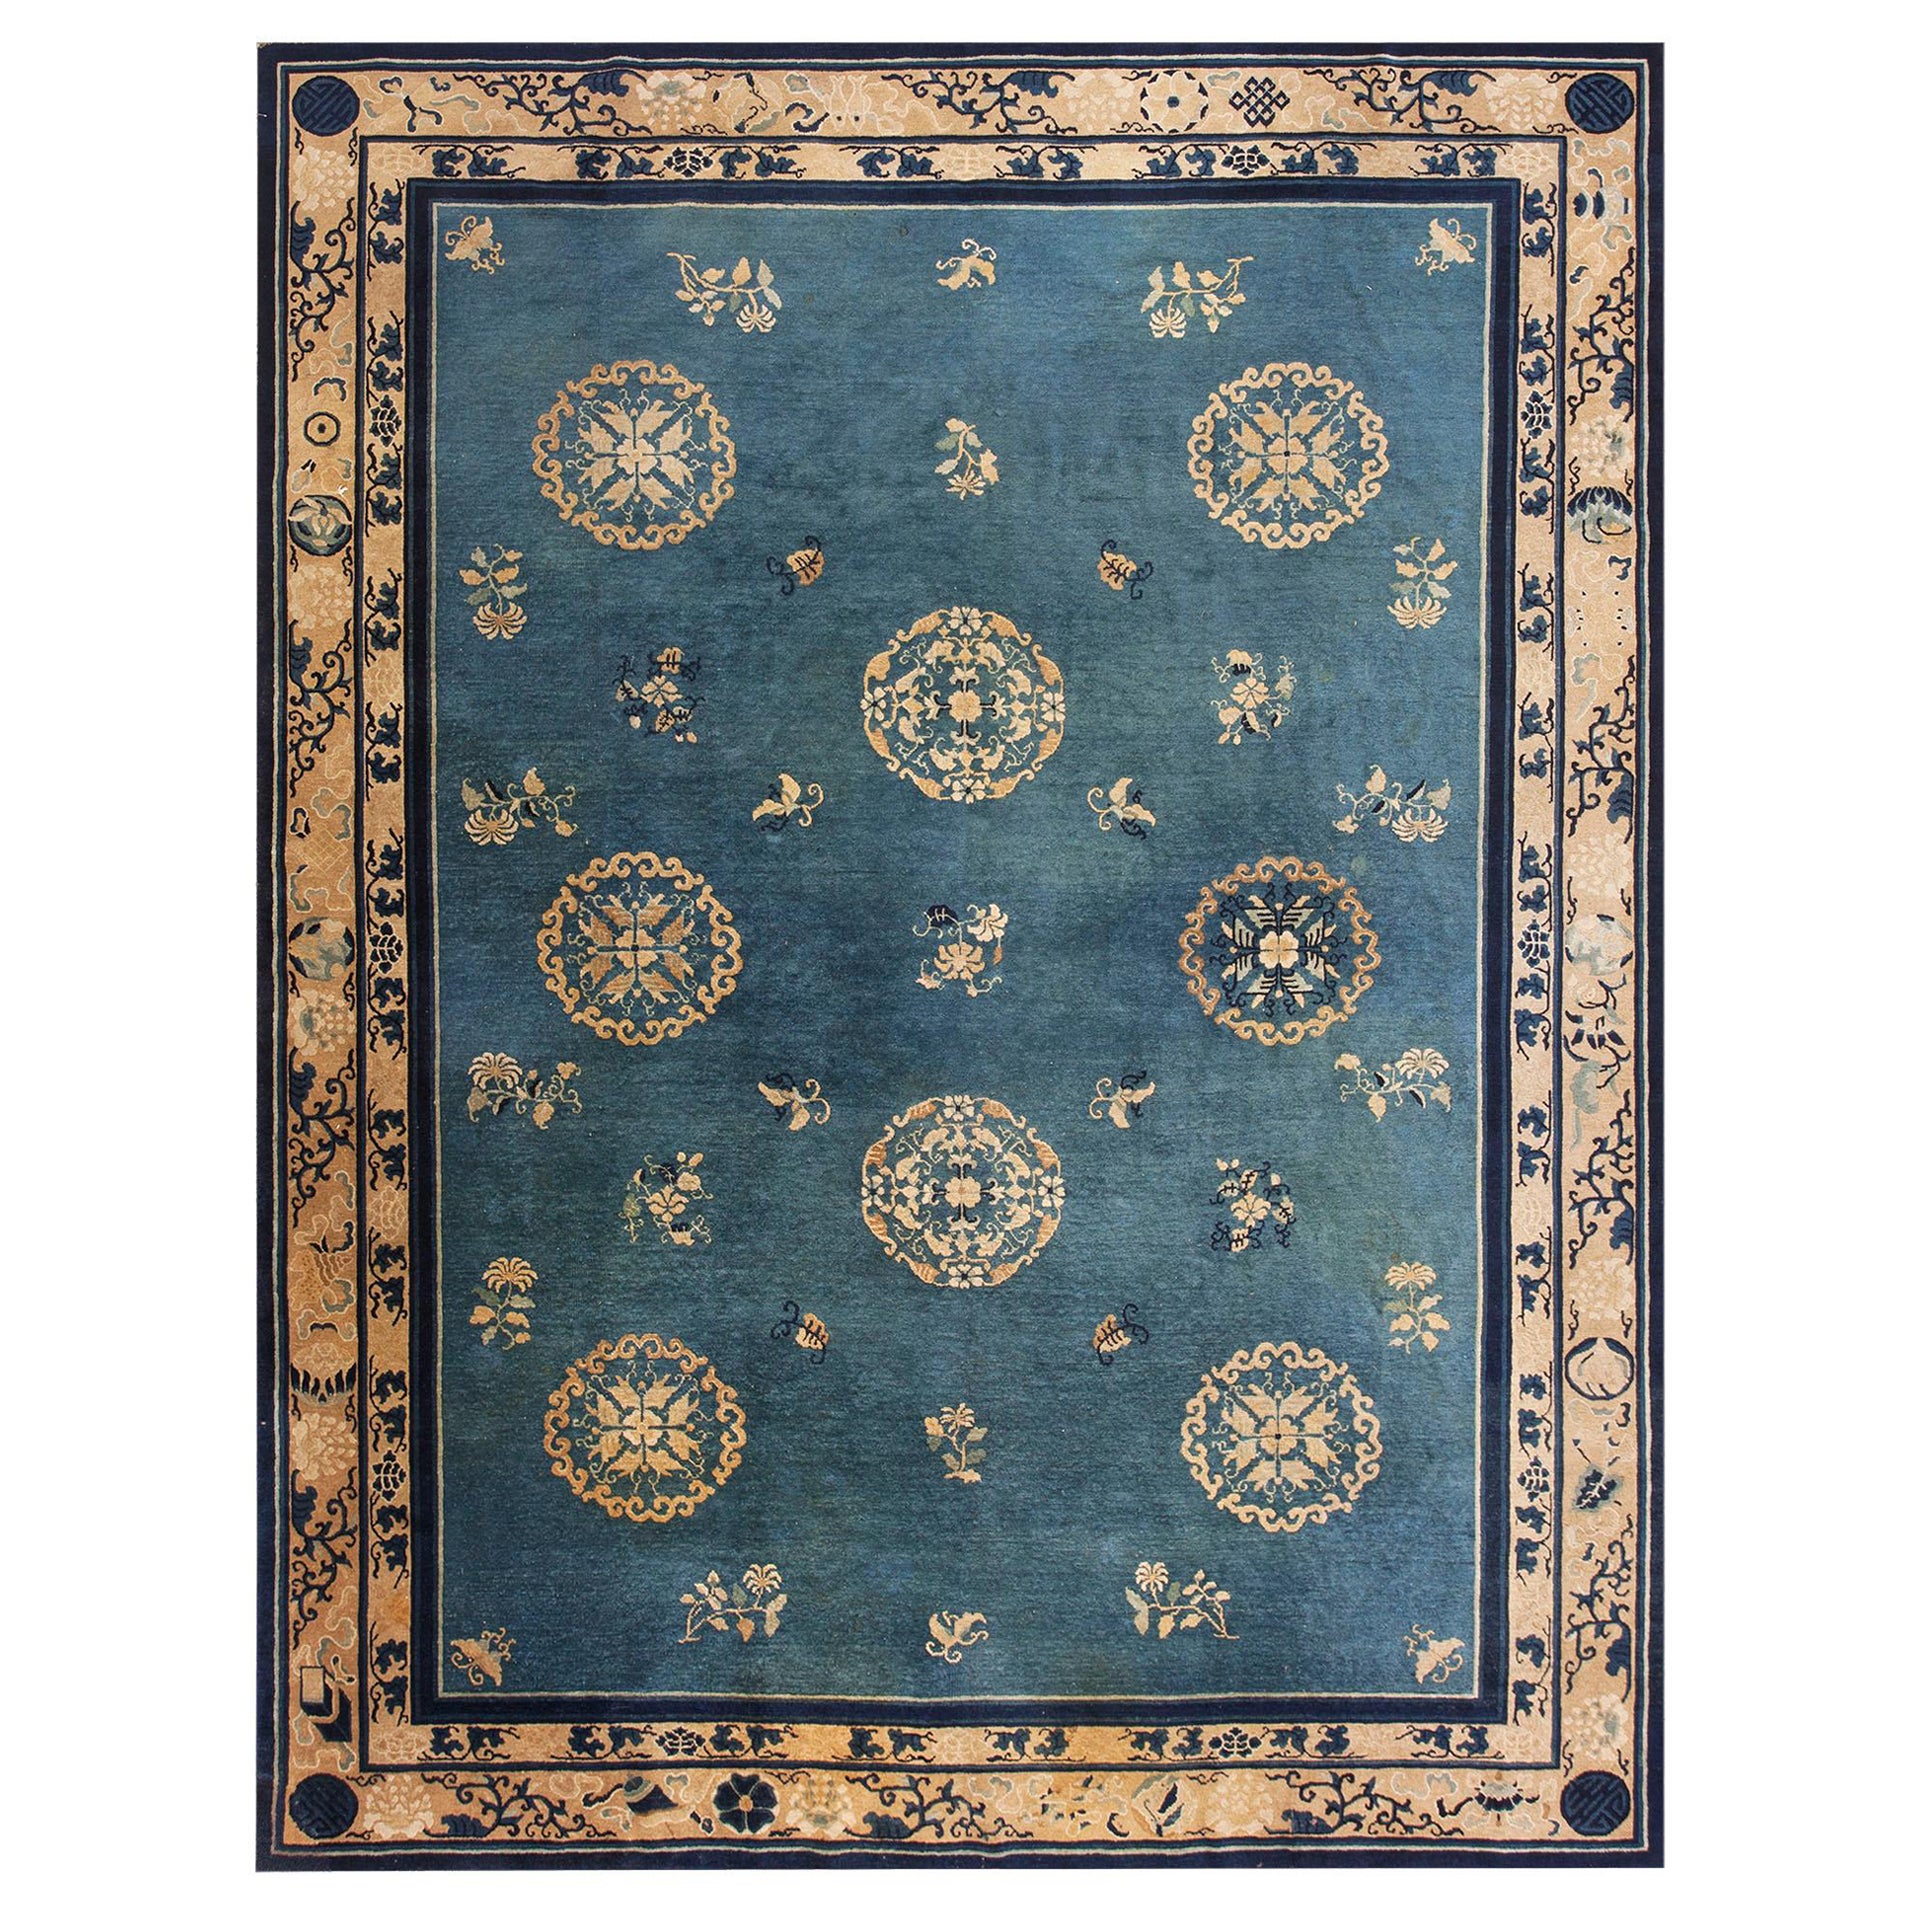 Early 20th Century Chinese Peking Carpet ( 8'2" X 10'8" - 245 X 325 )